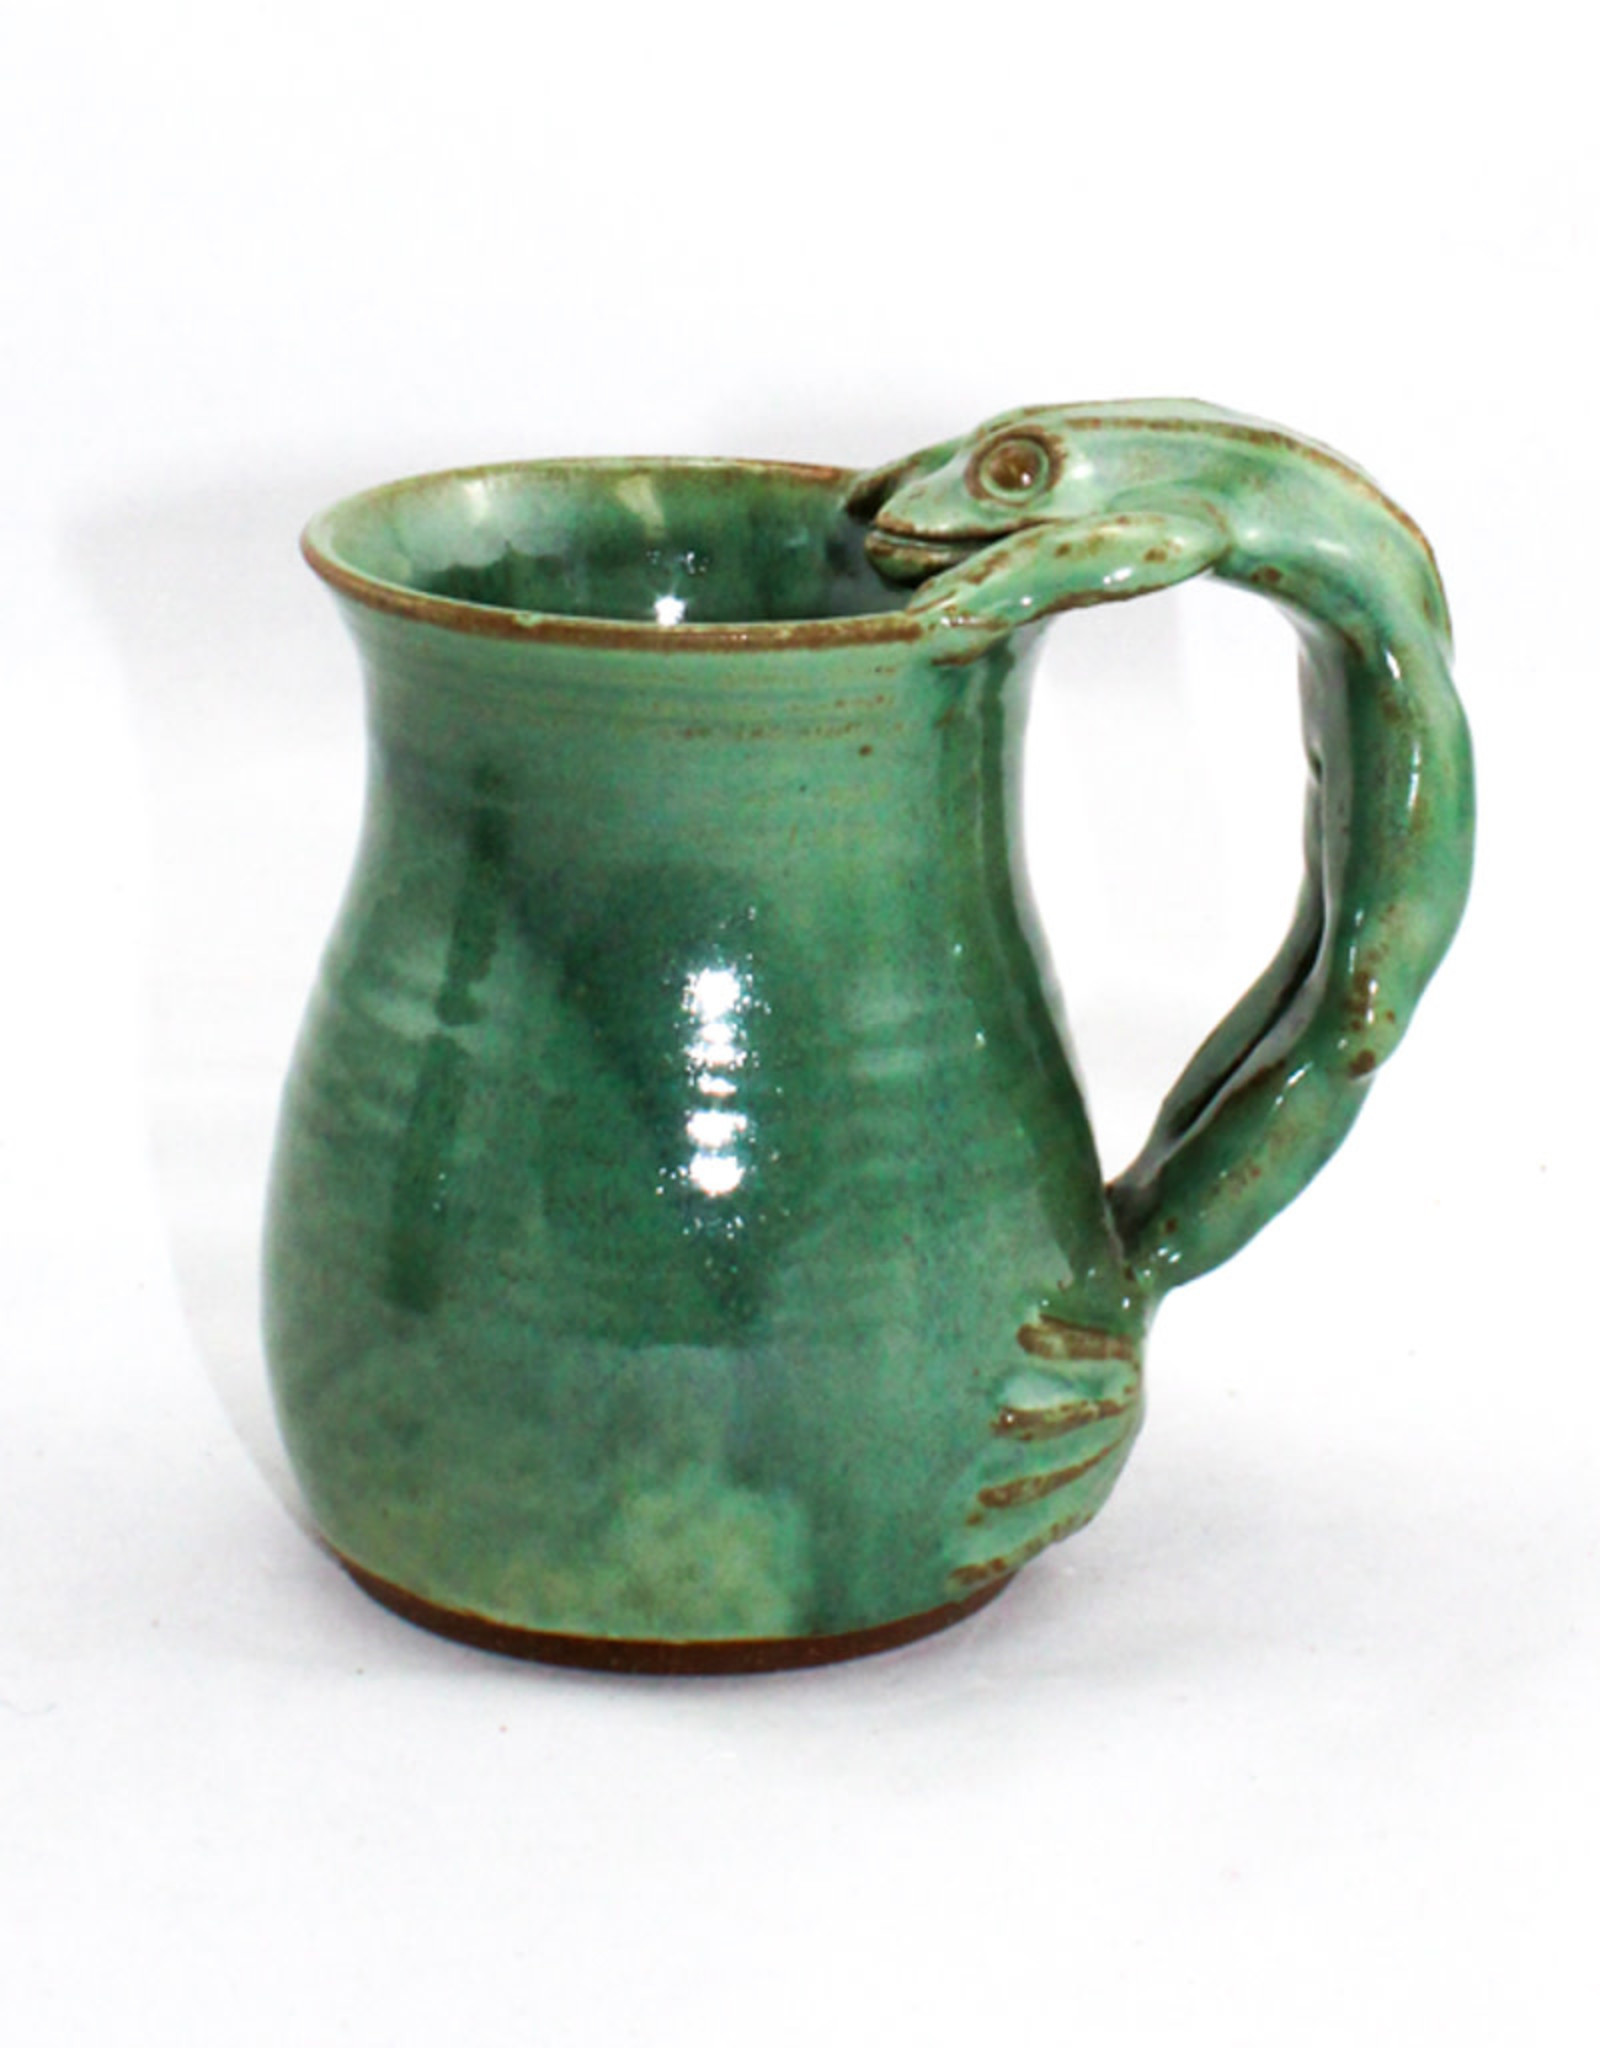 Funkware Pottery Frog Mug Blue